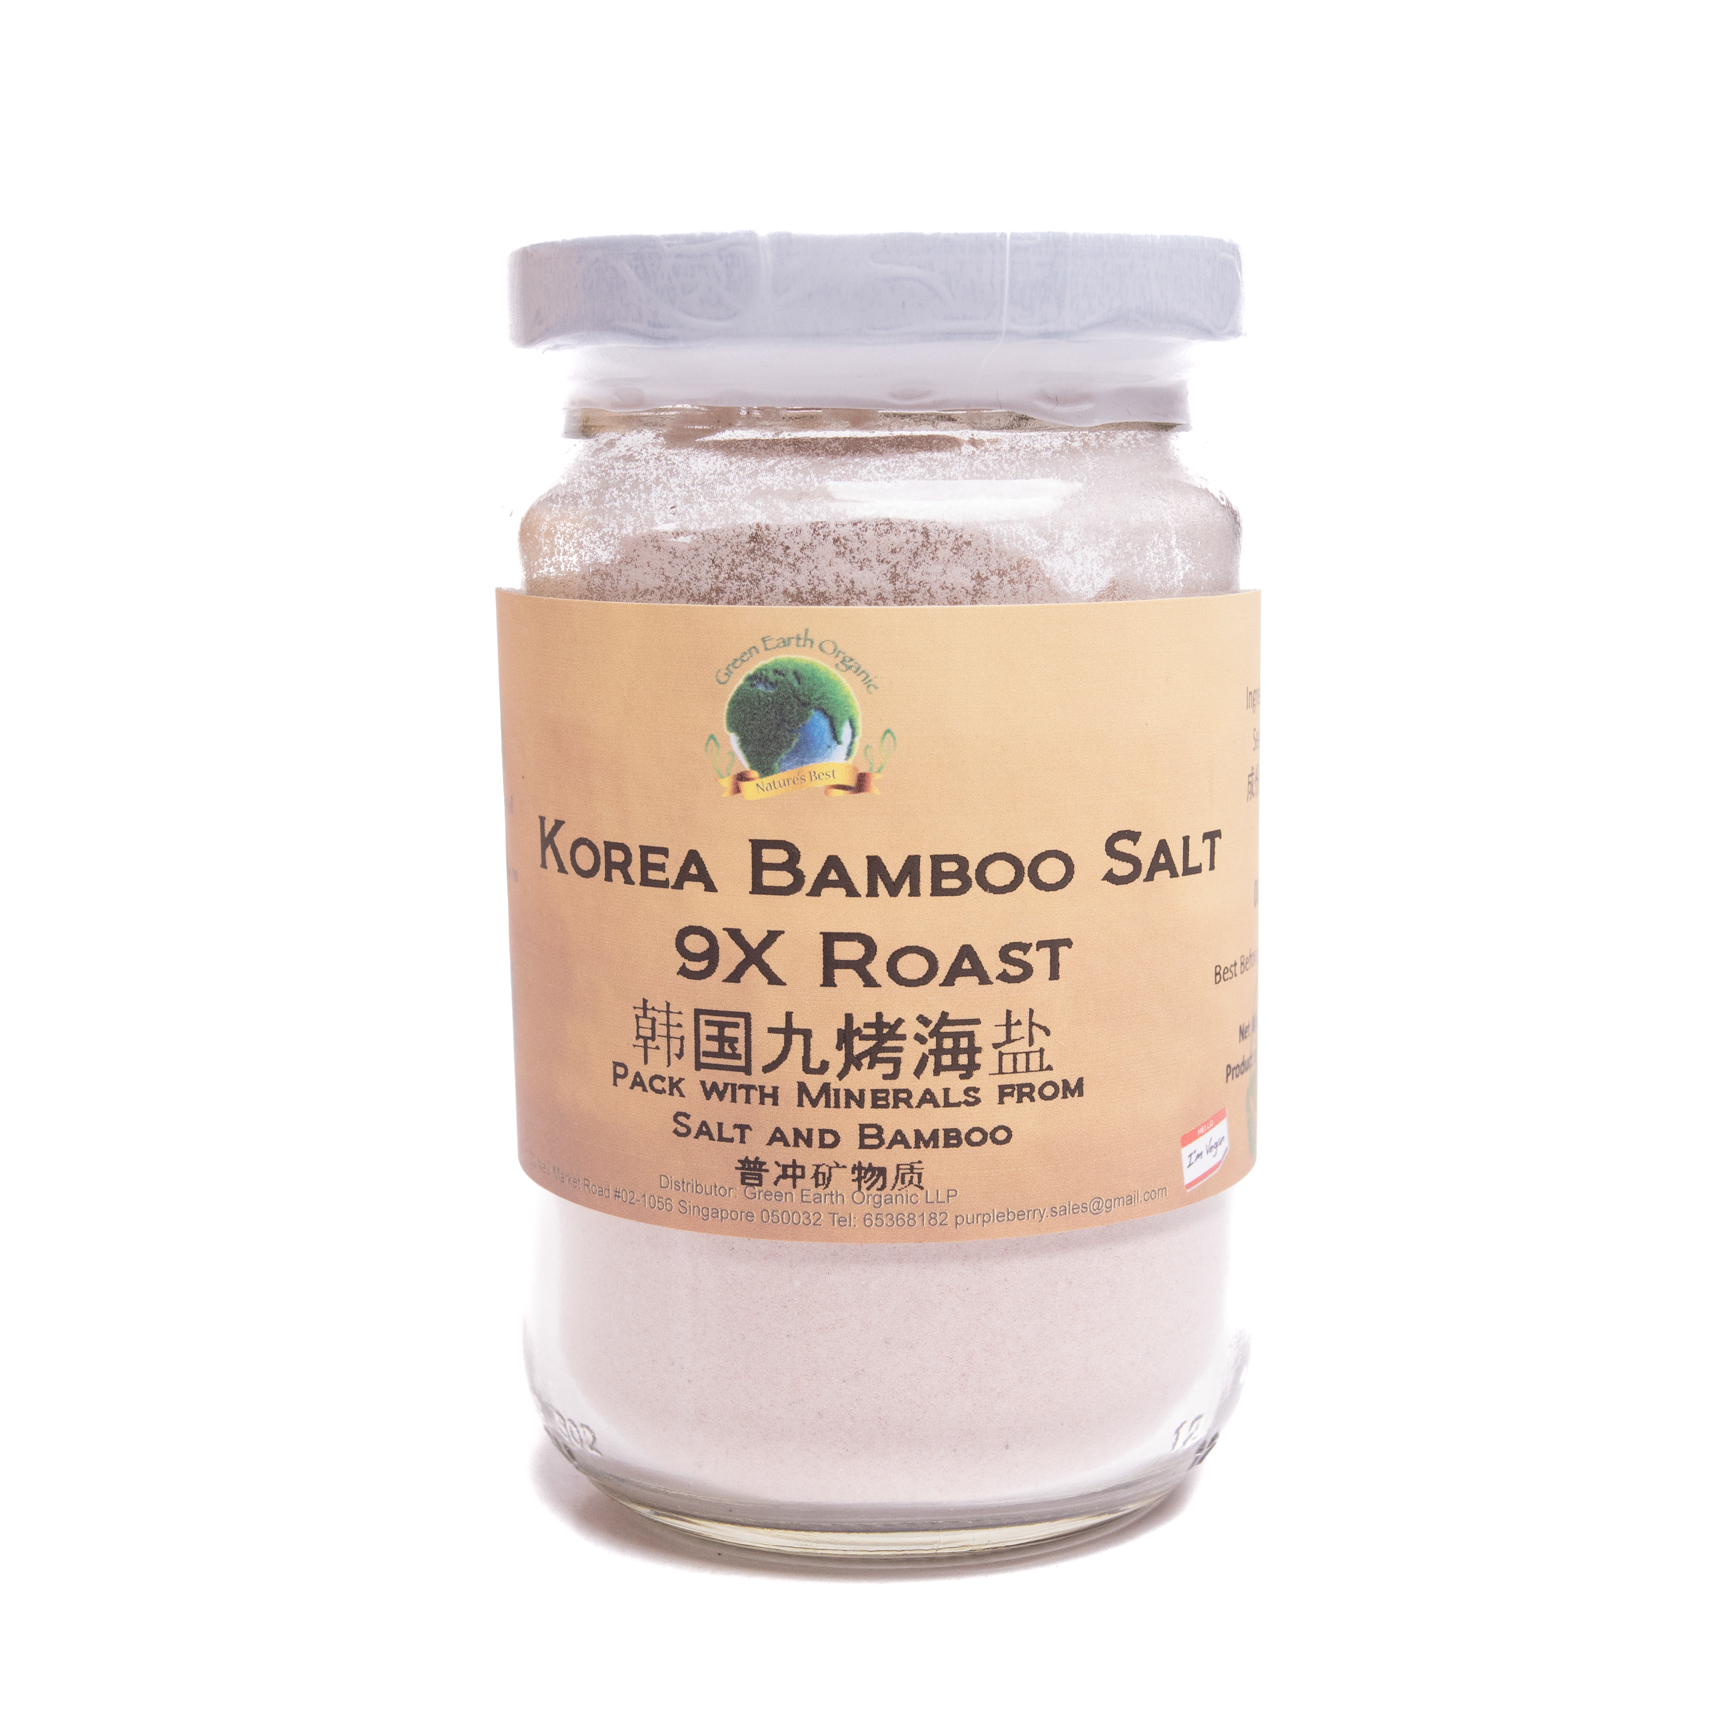 Korean Bamboo Salt 9x Roast